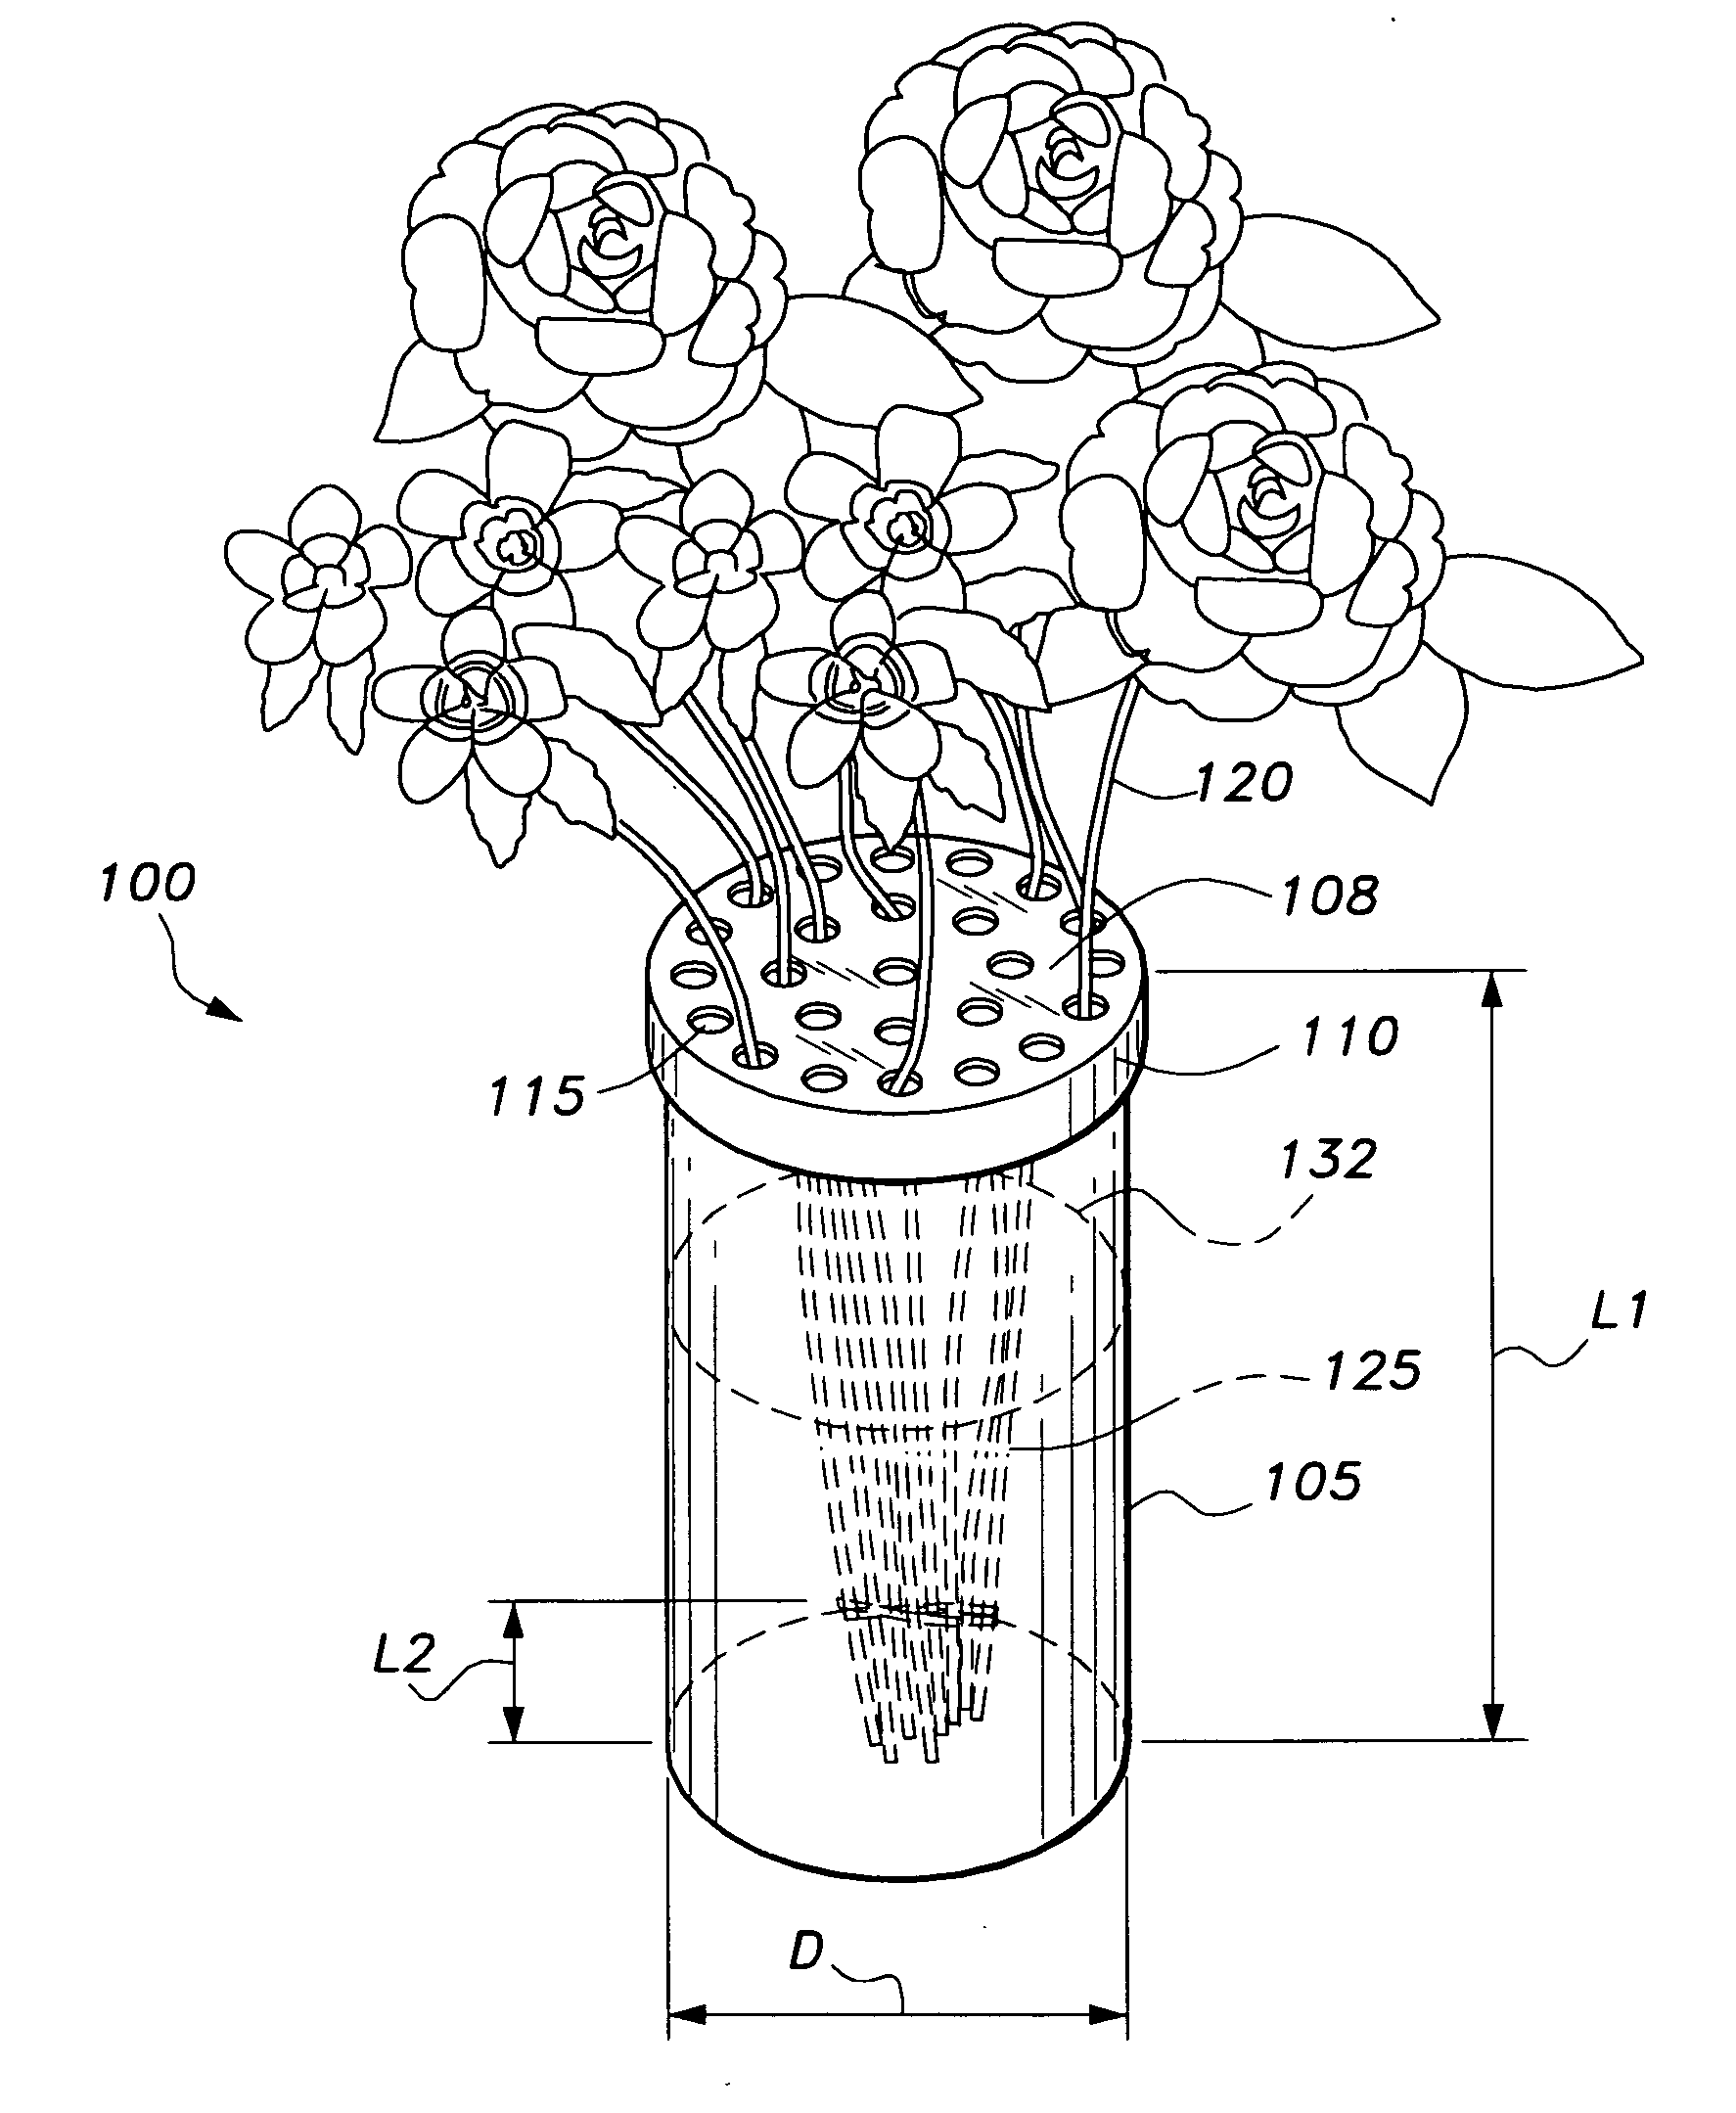 Fresh flower bouquet system